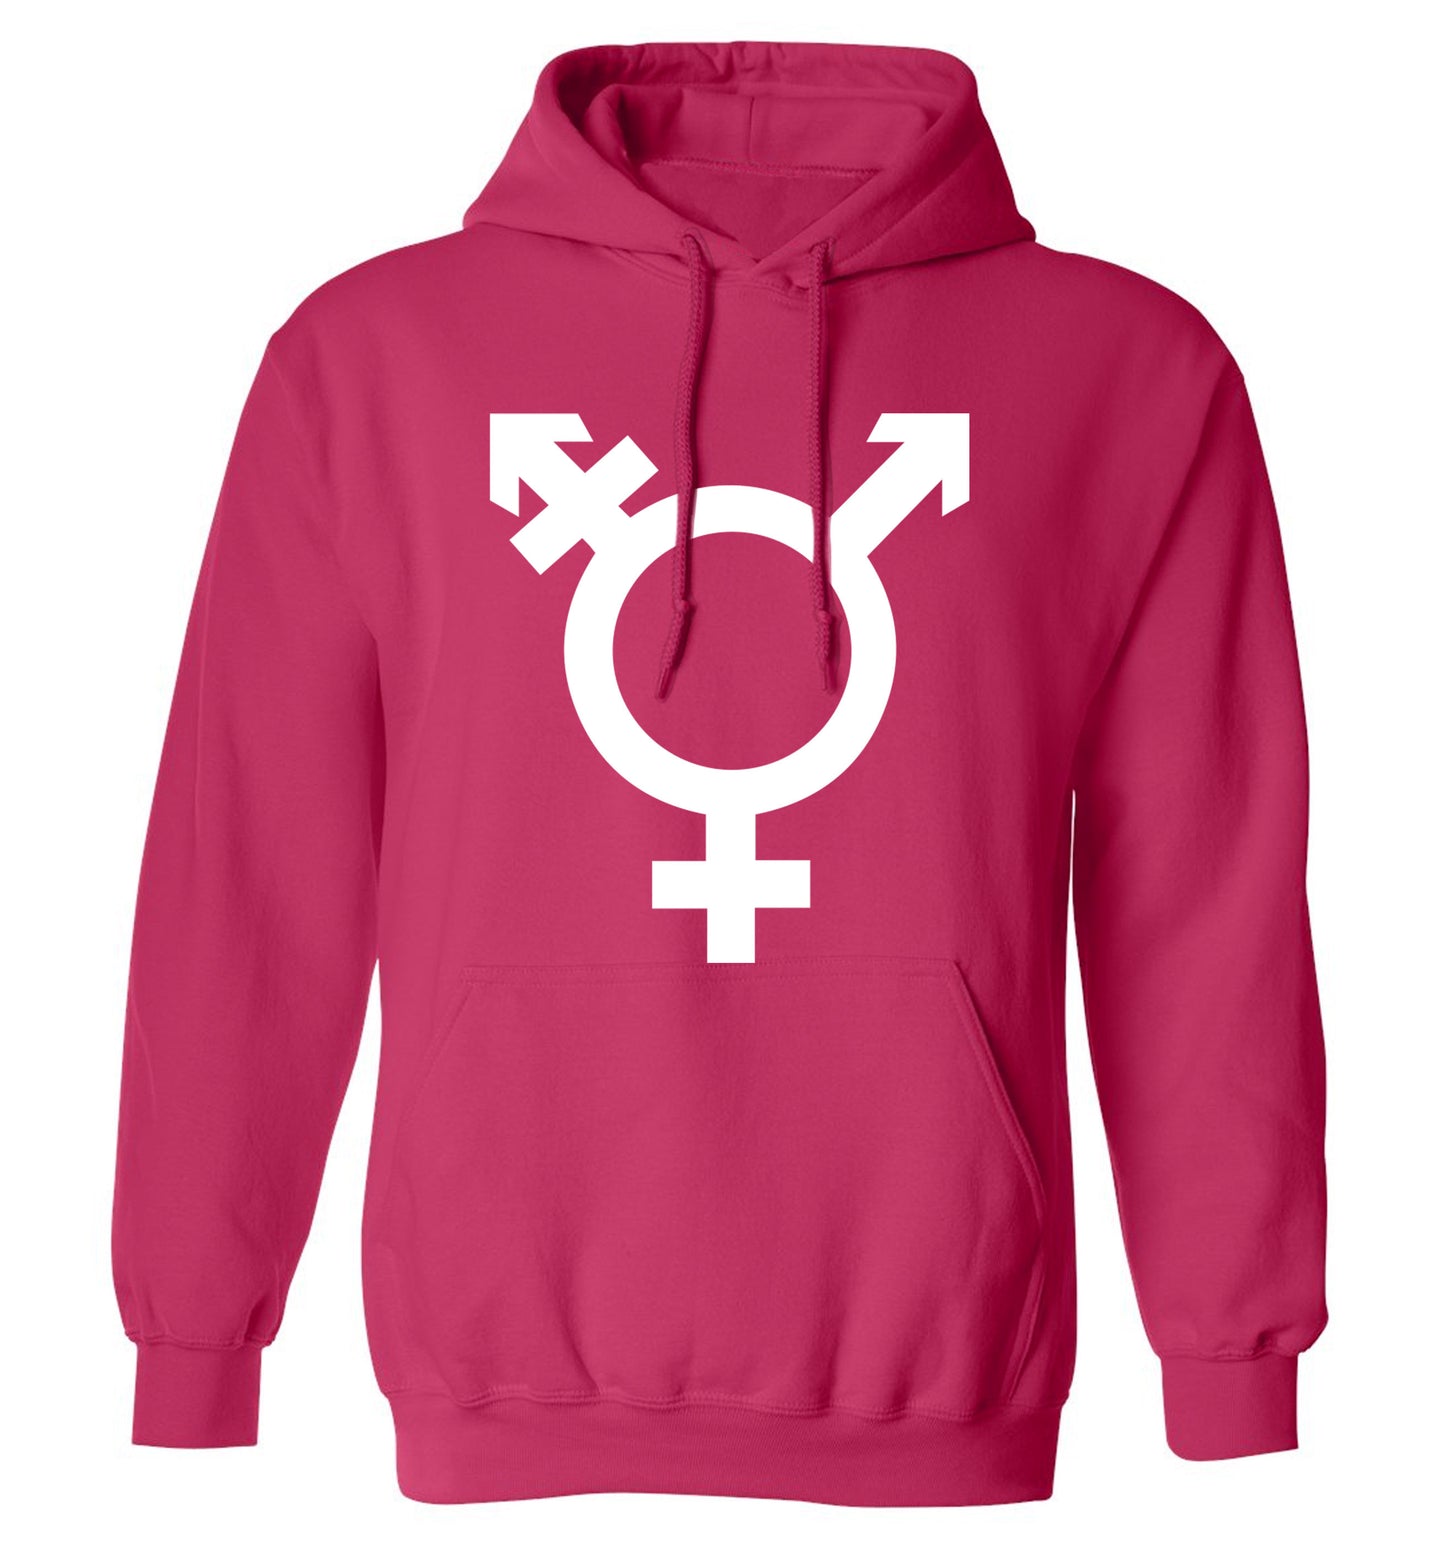 Gender neutral symbol large adults unisex pink hoodie 2XL